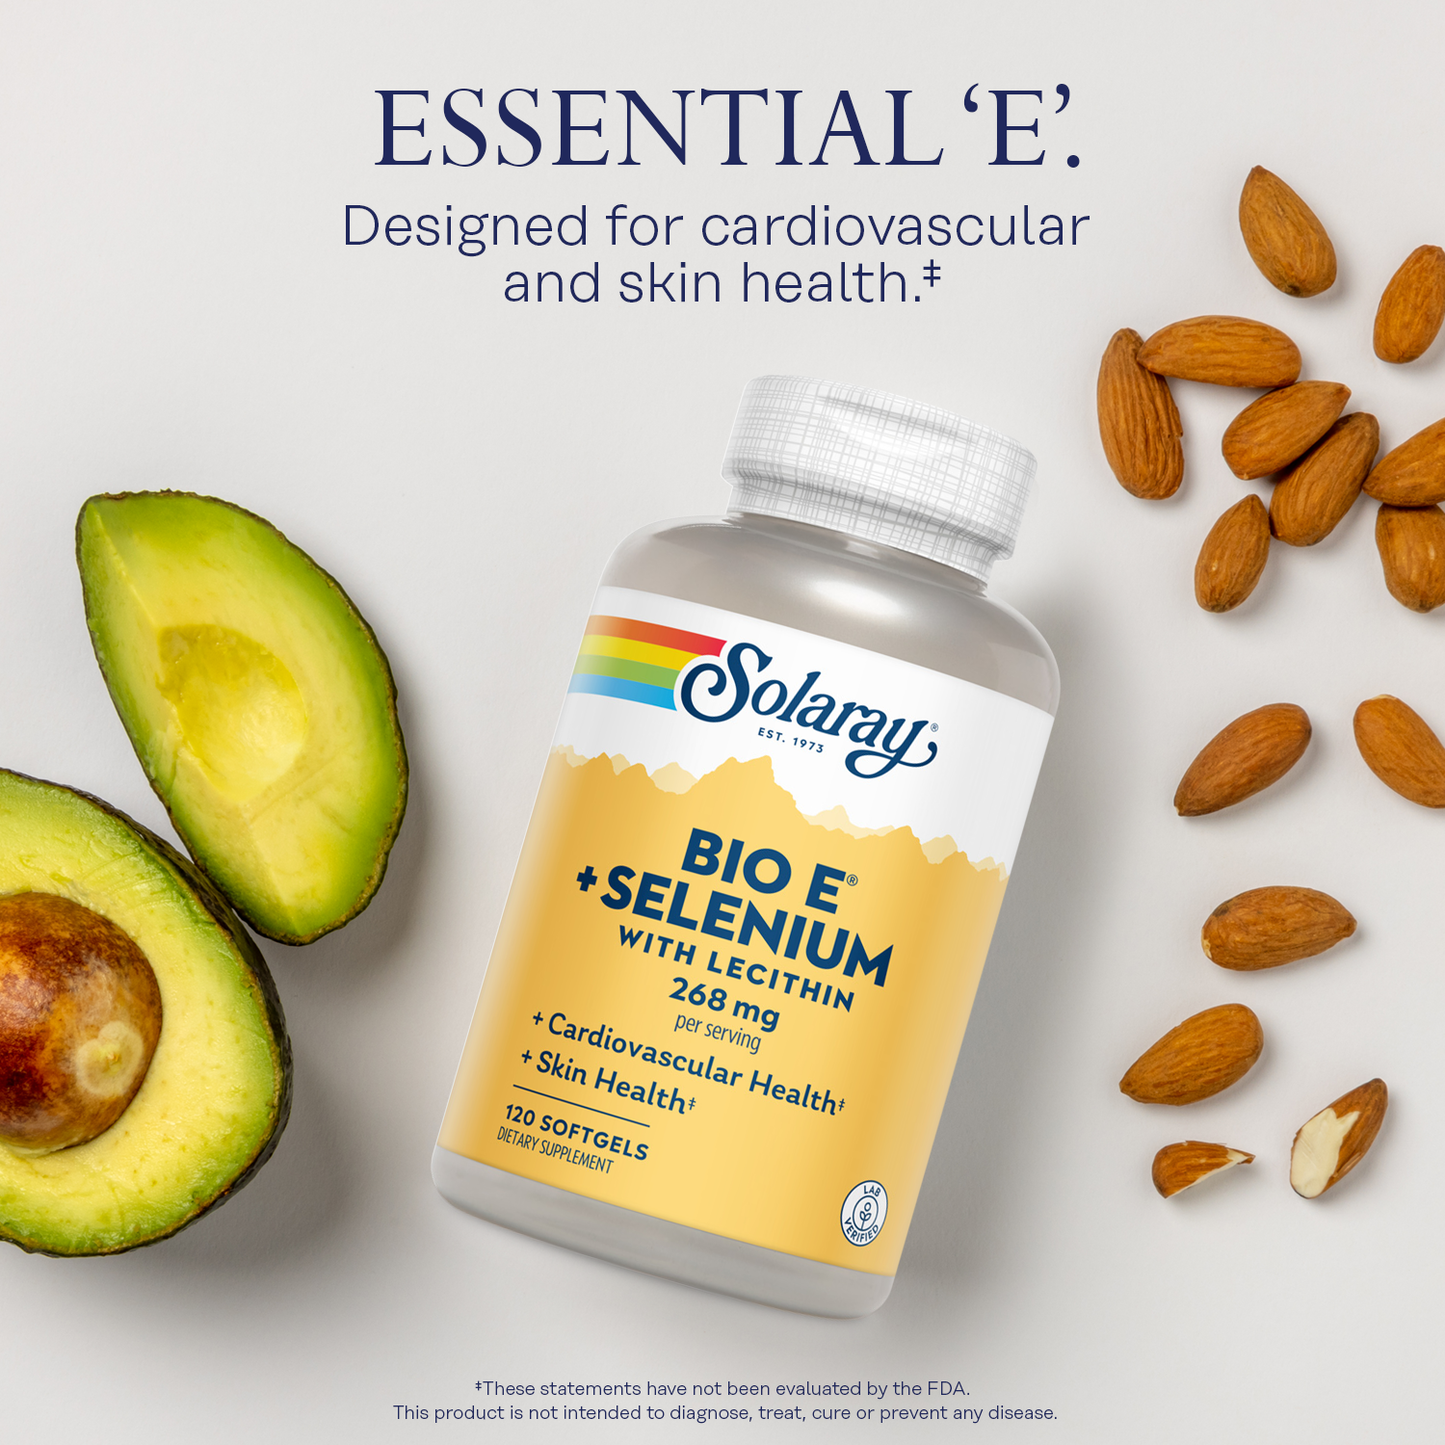 Solaray Bio Vitamin E with Selenium 400IU Healthy Cardiac Function, Antioxidant Activity & Skin Support High Absorption 120 Softgels